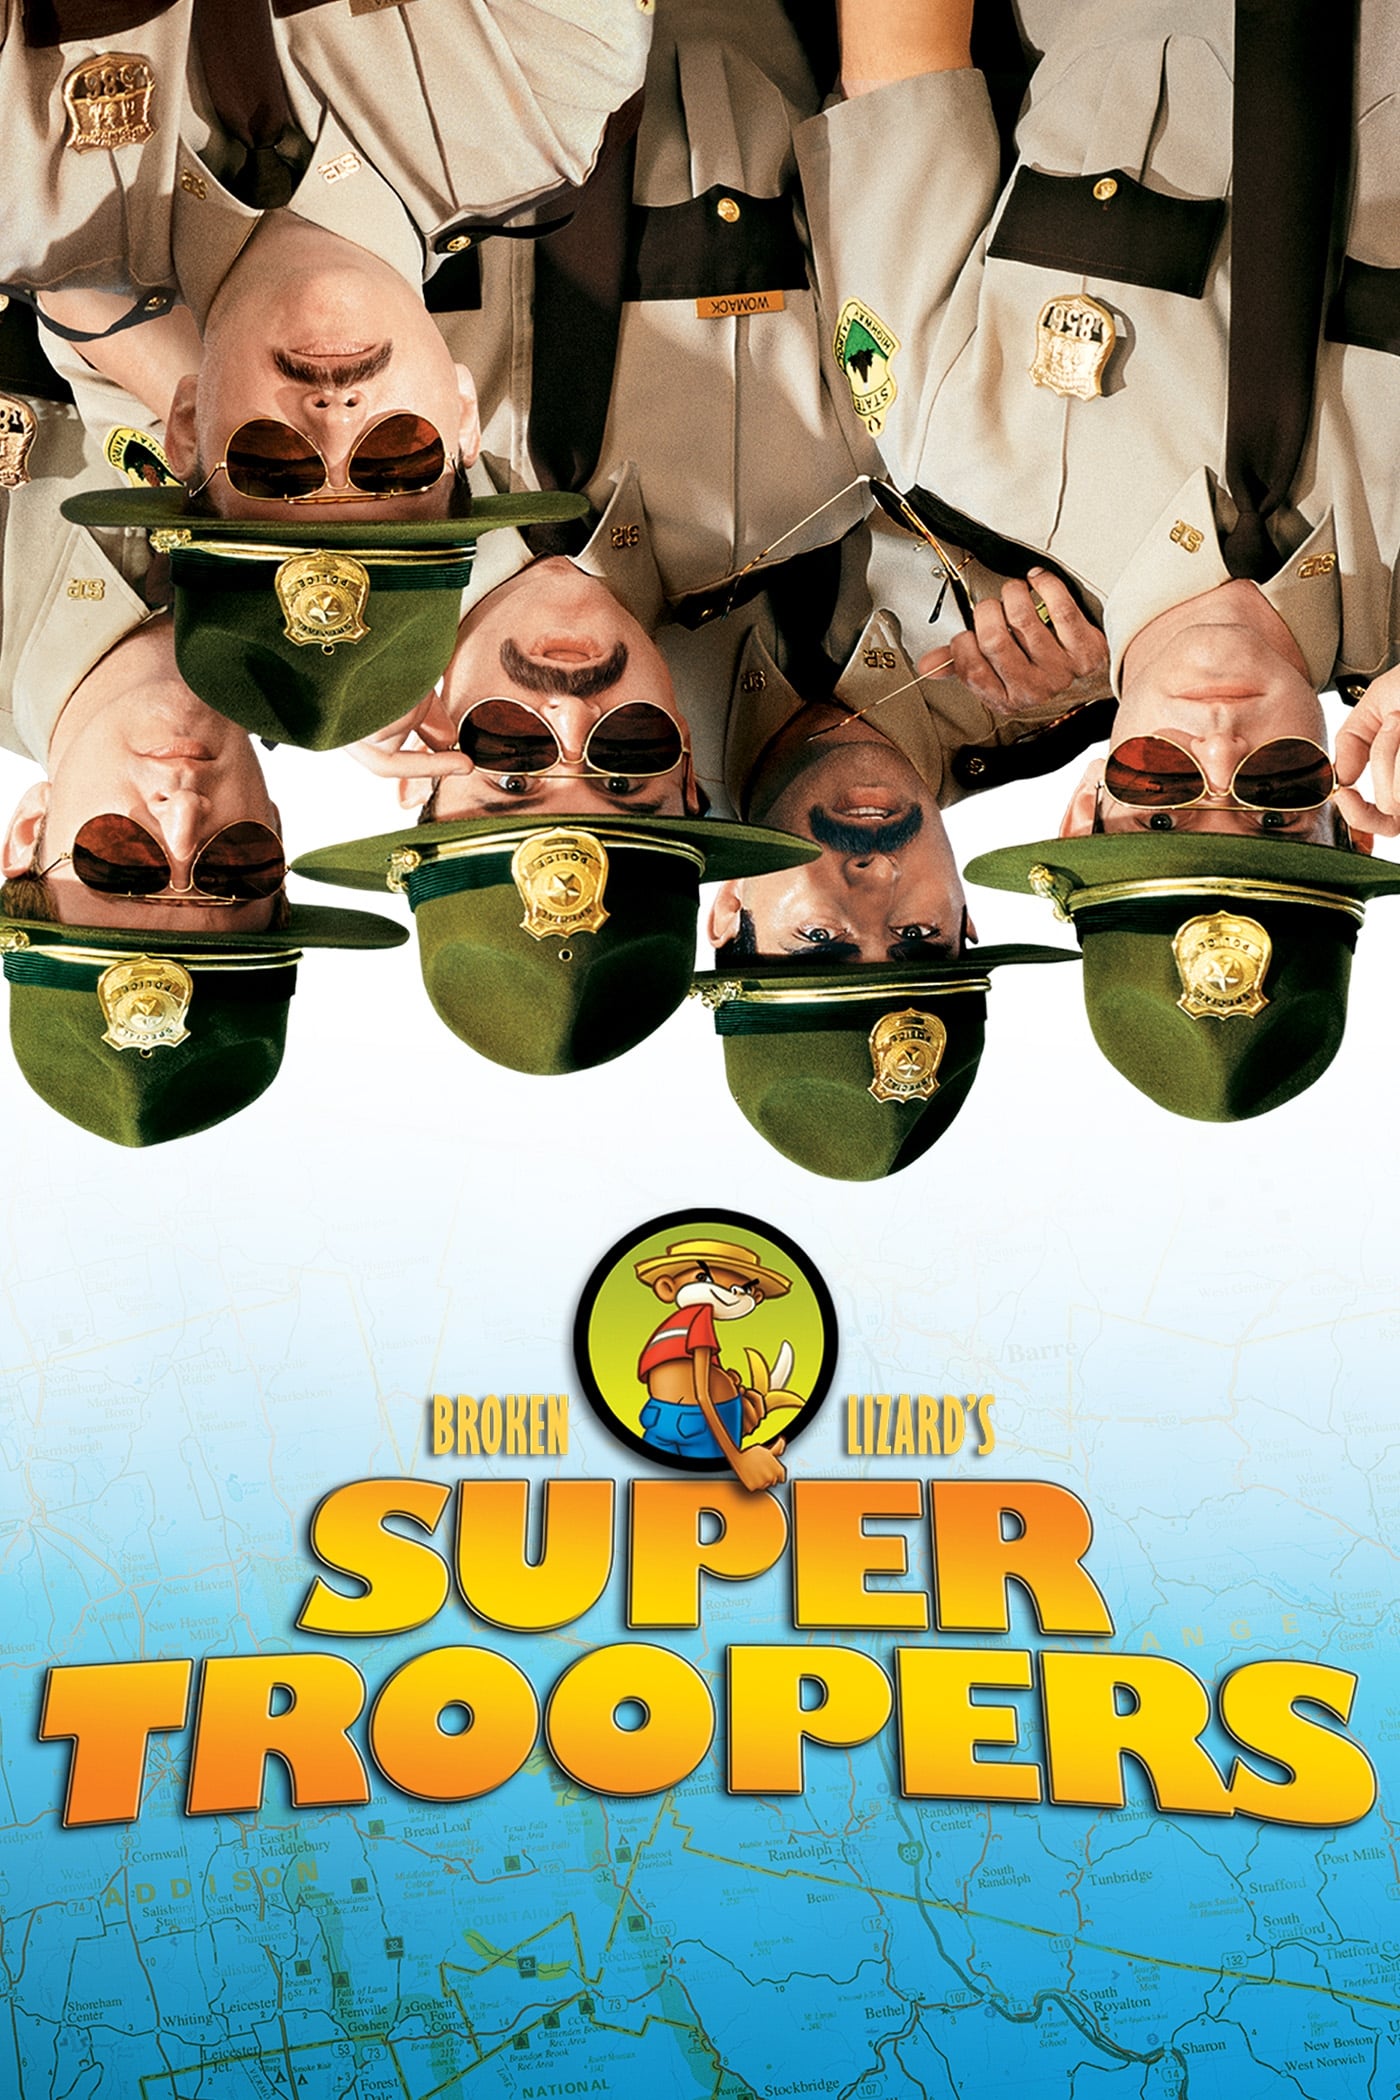 Super Troopers [HD] (2001)